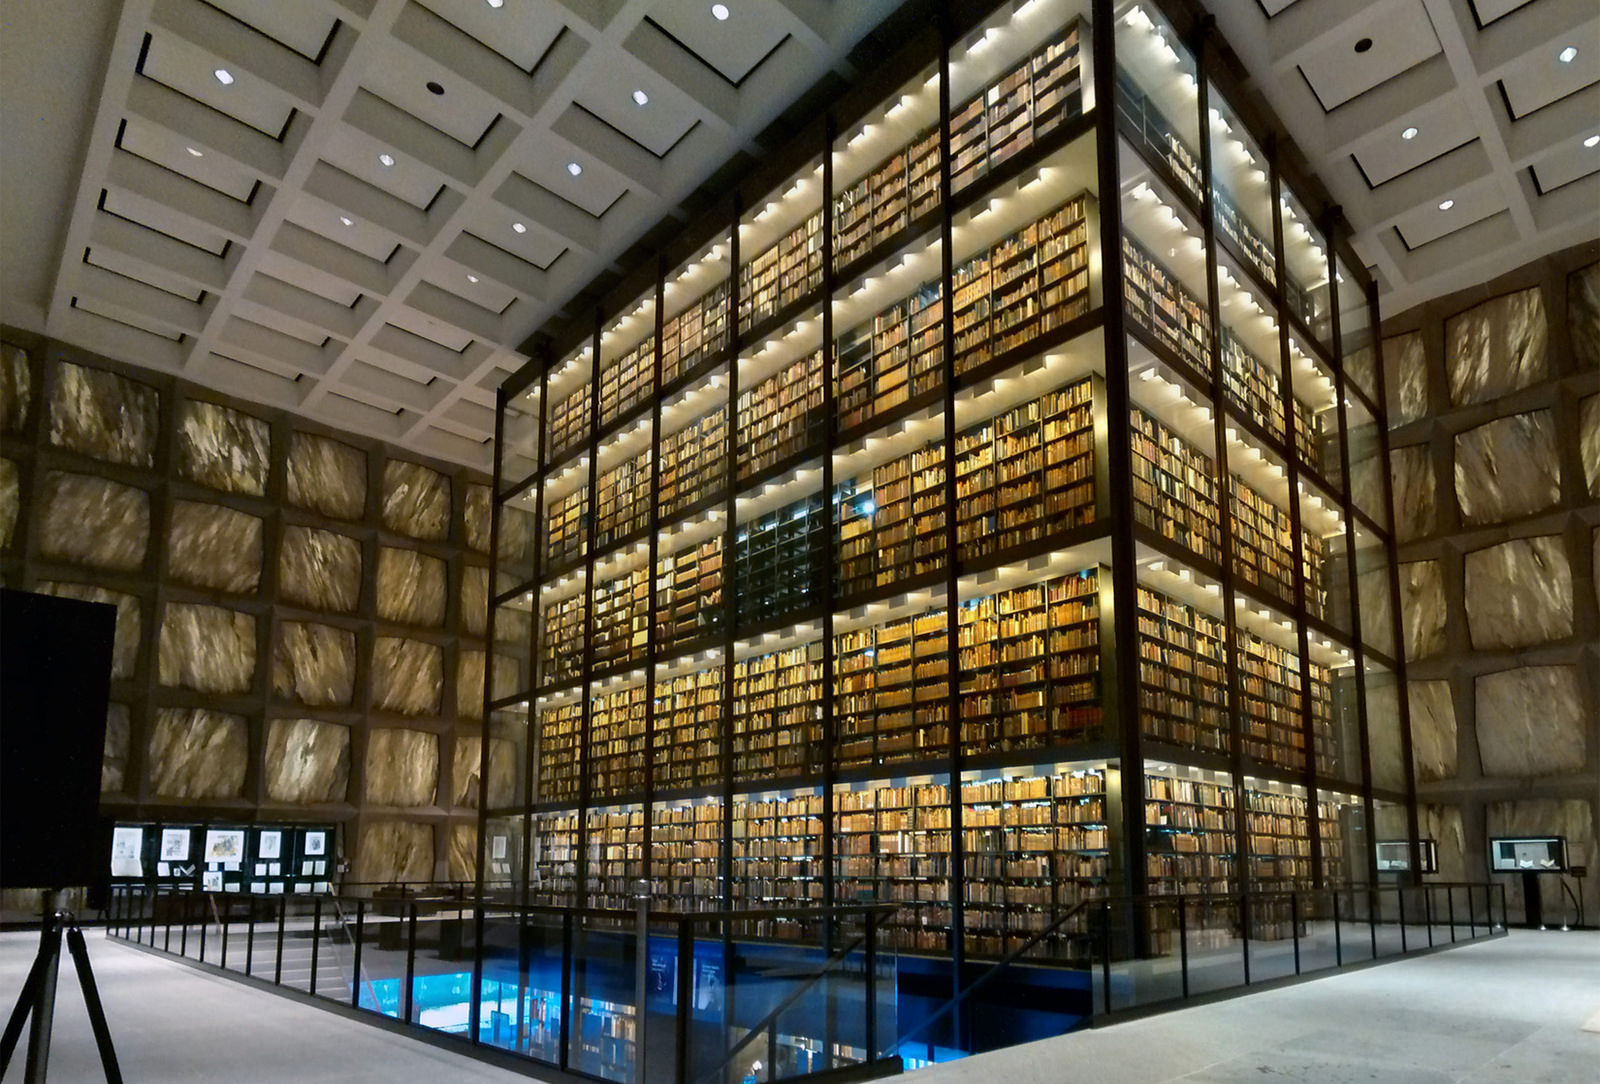 Beinecke Rare Book & Manuscript Library Interior